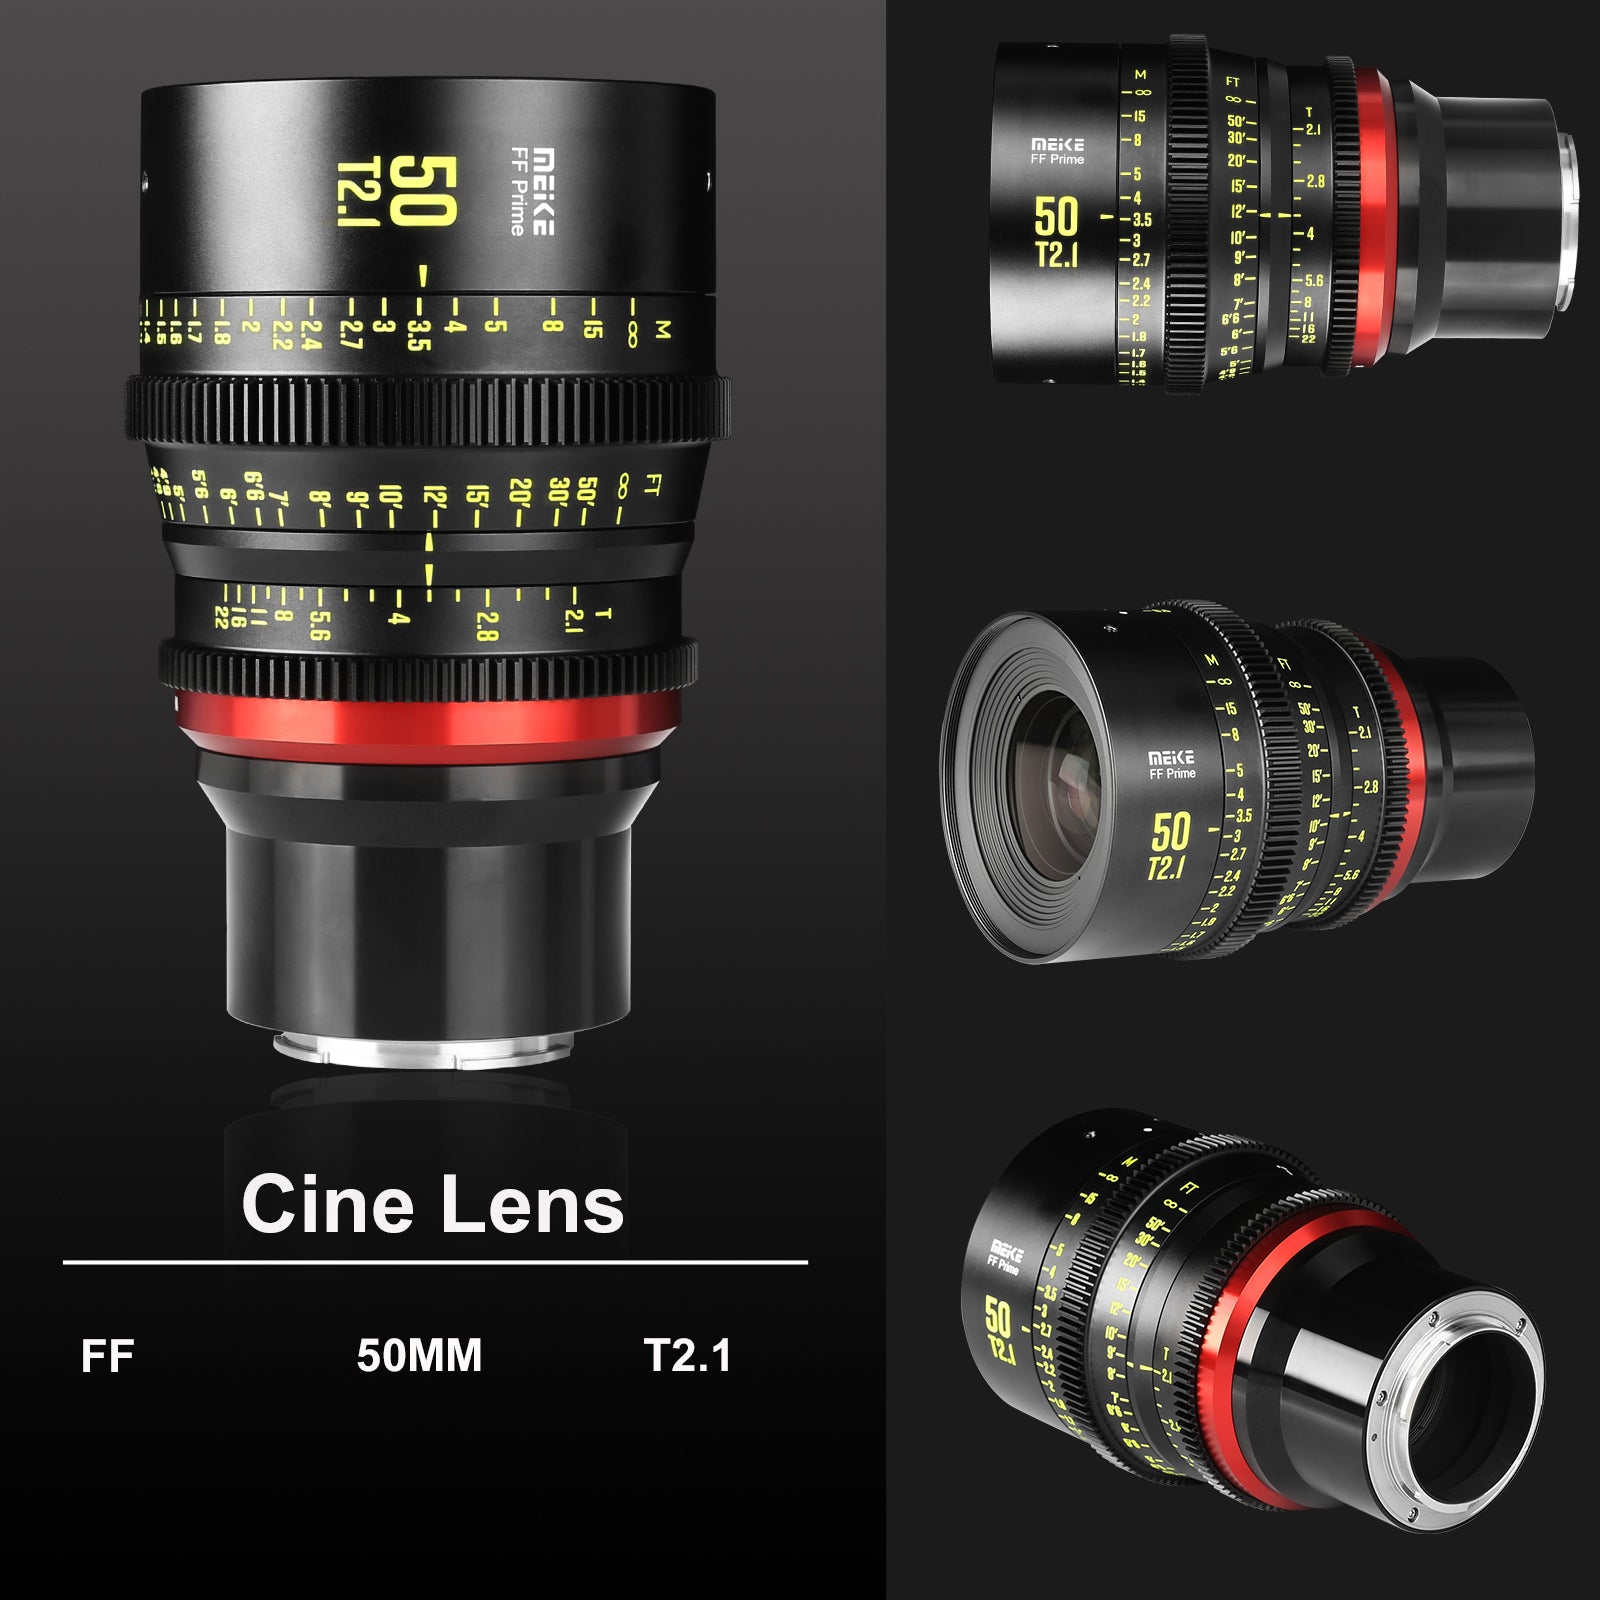 Meike Cinema Full Frame Cinema Prime 50mm T2.1 Lens (Sony E Mount) in Different Perspectives